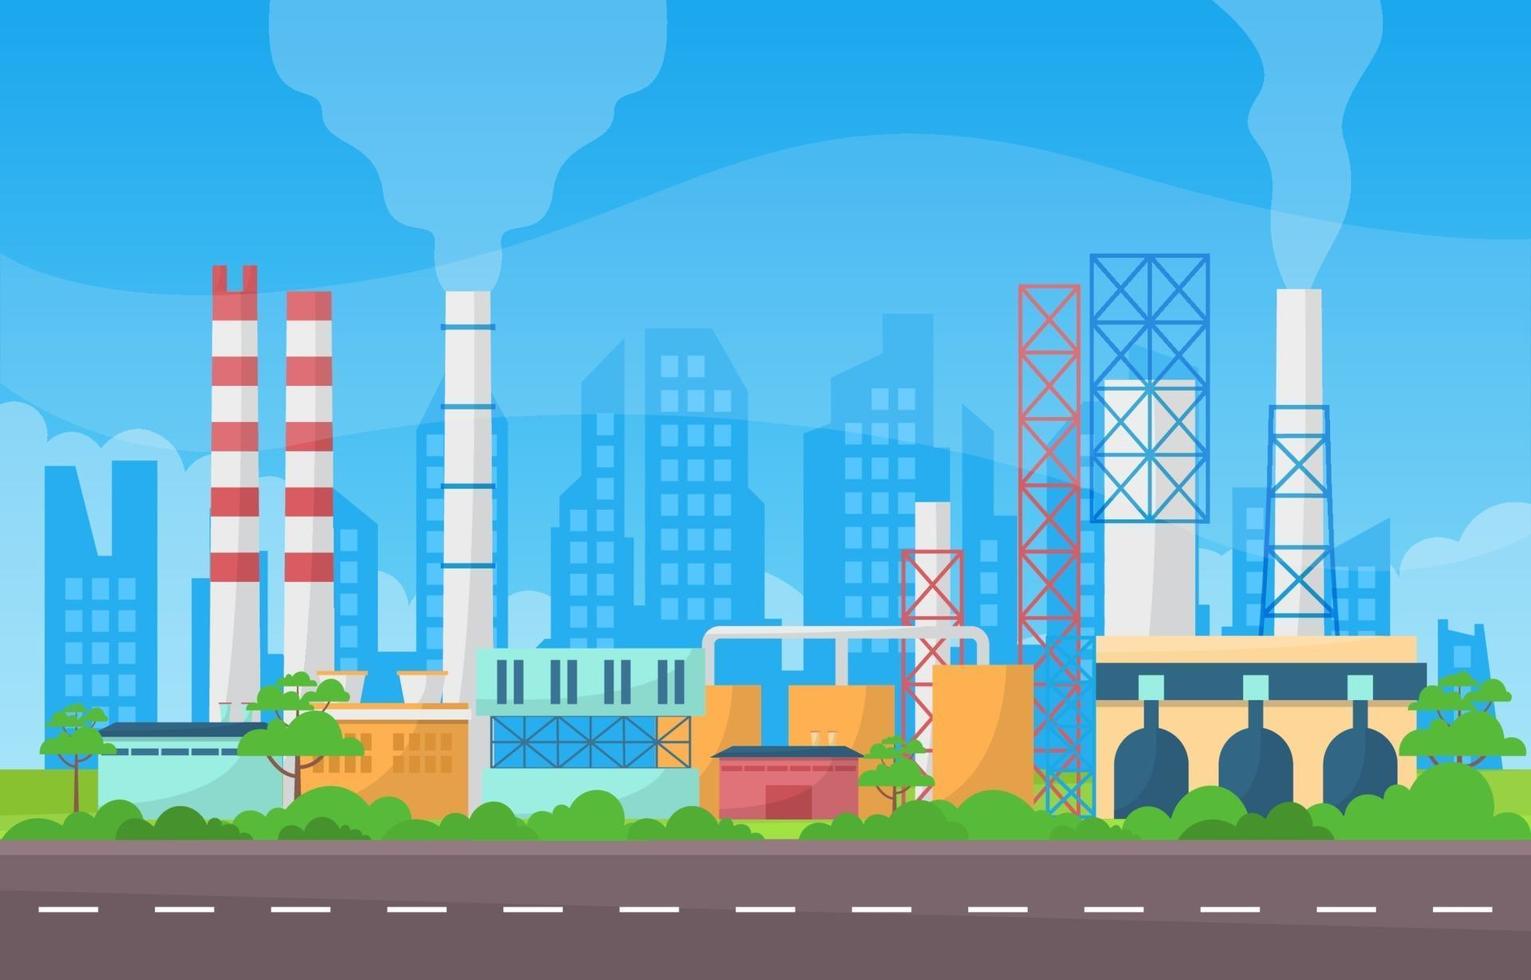 Industrial Factory Buildings Flat Illustration vector